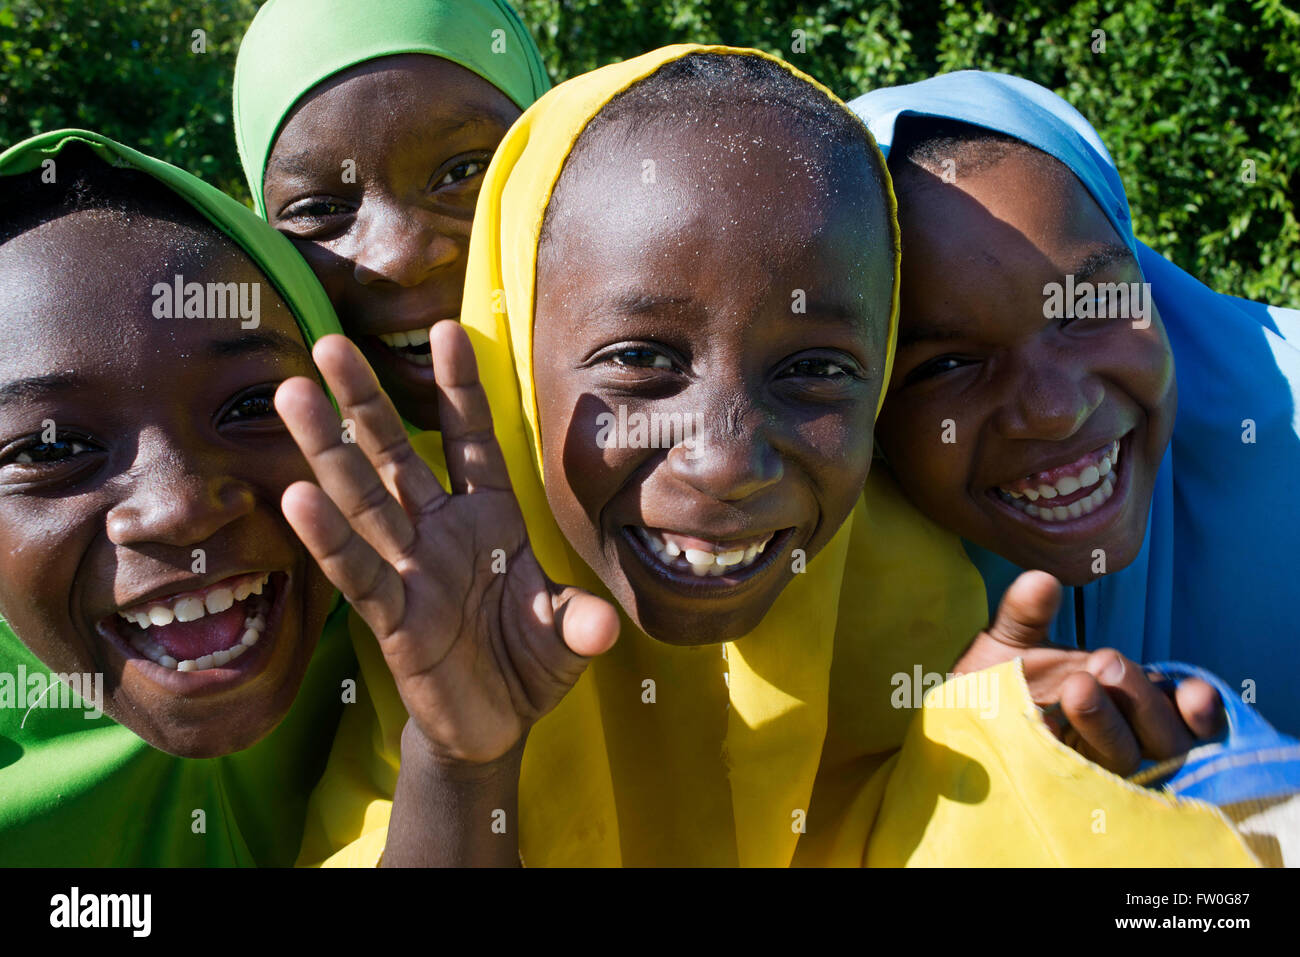 Young girls dressed with colorful clothing in Kizimkazi Dimbani village, West coast, Zanzibar, Tanzania. Stock Photo